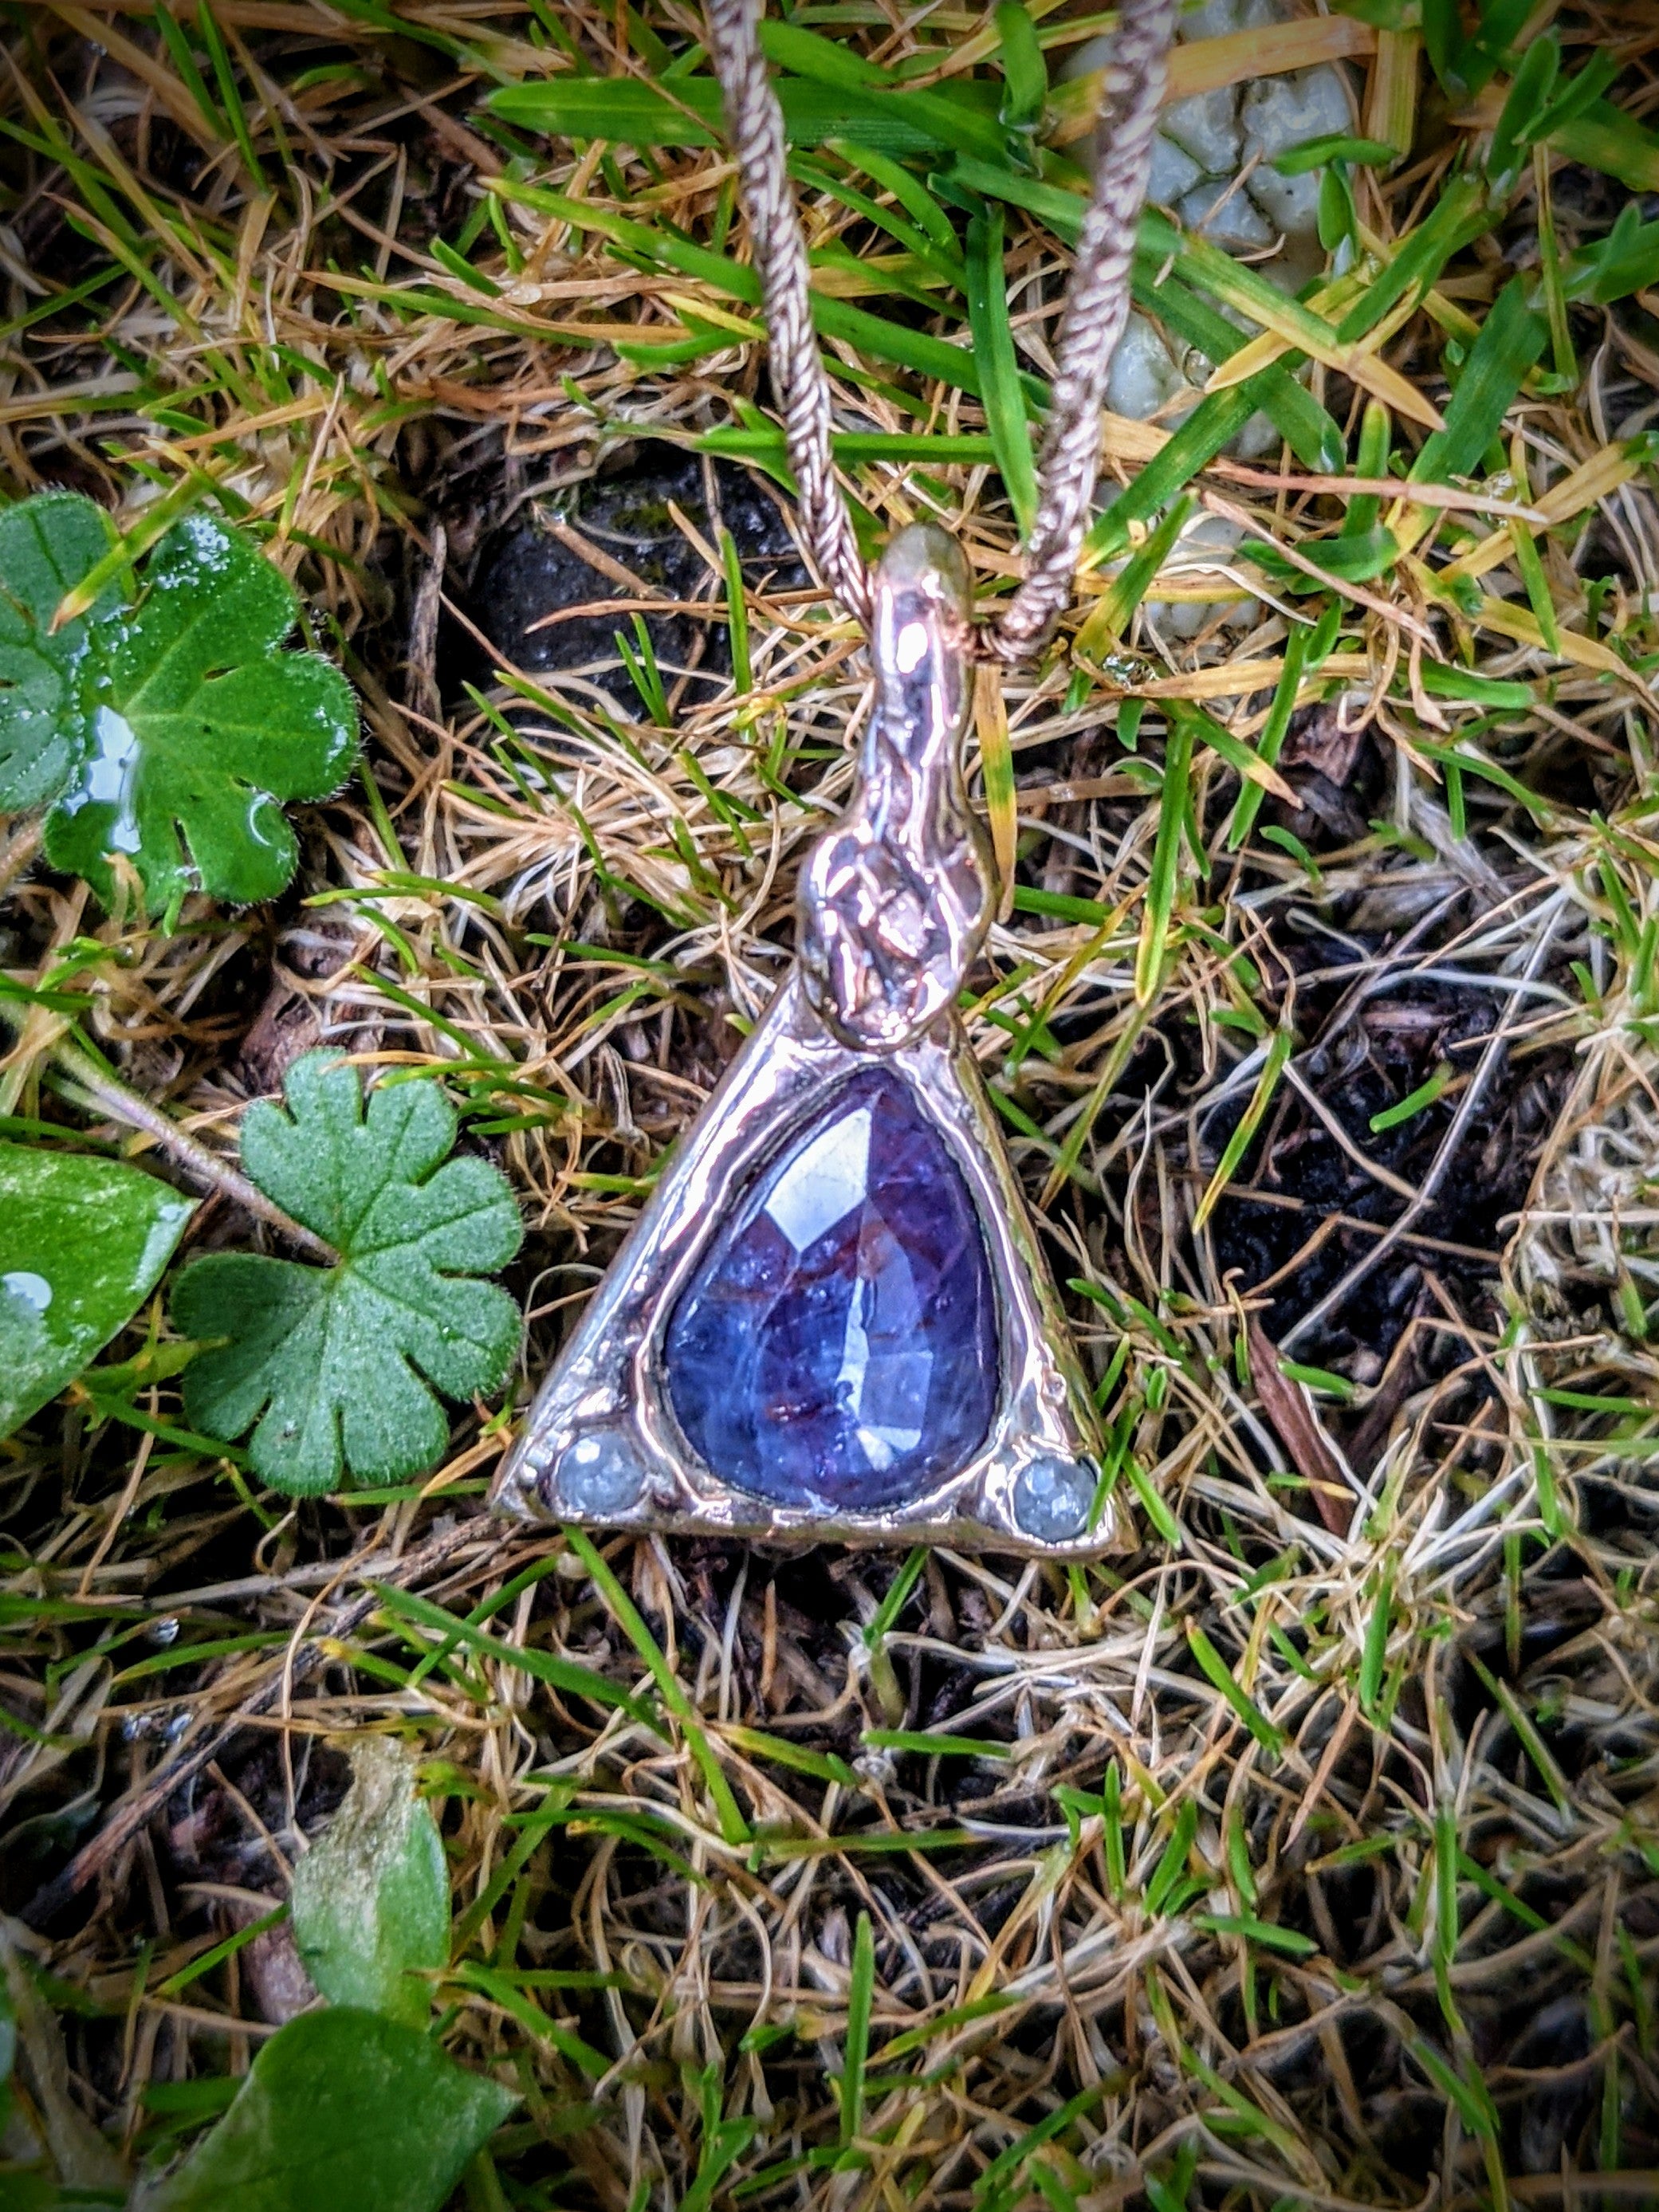 10k Gold Seiun Necklace, Purple Galaxy Sapphire and Gray Diamonds